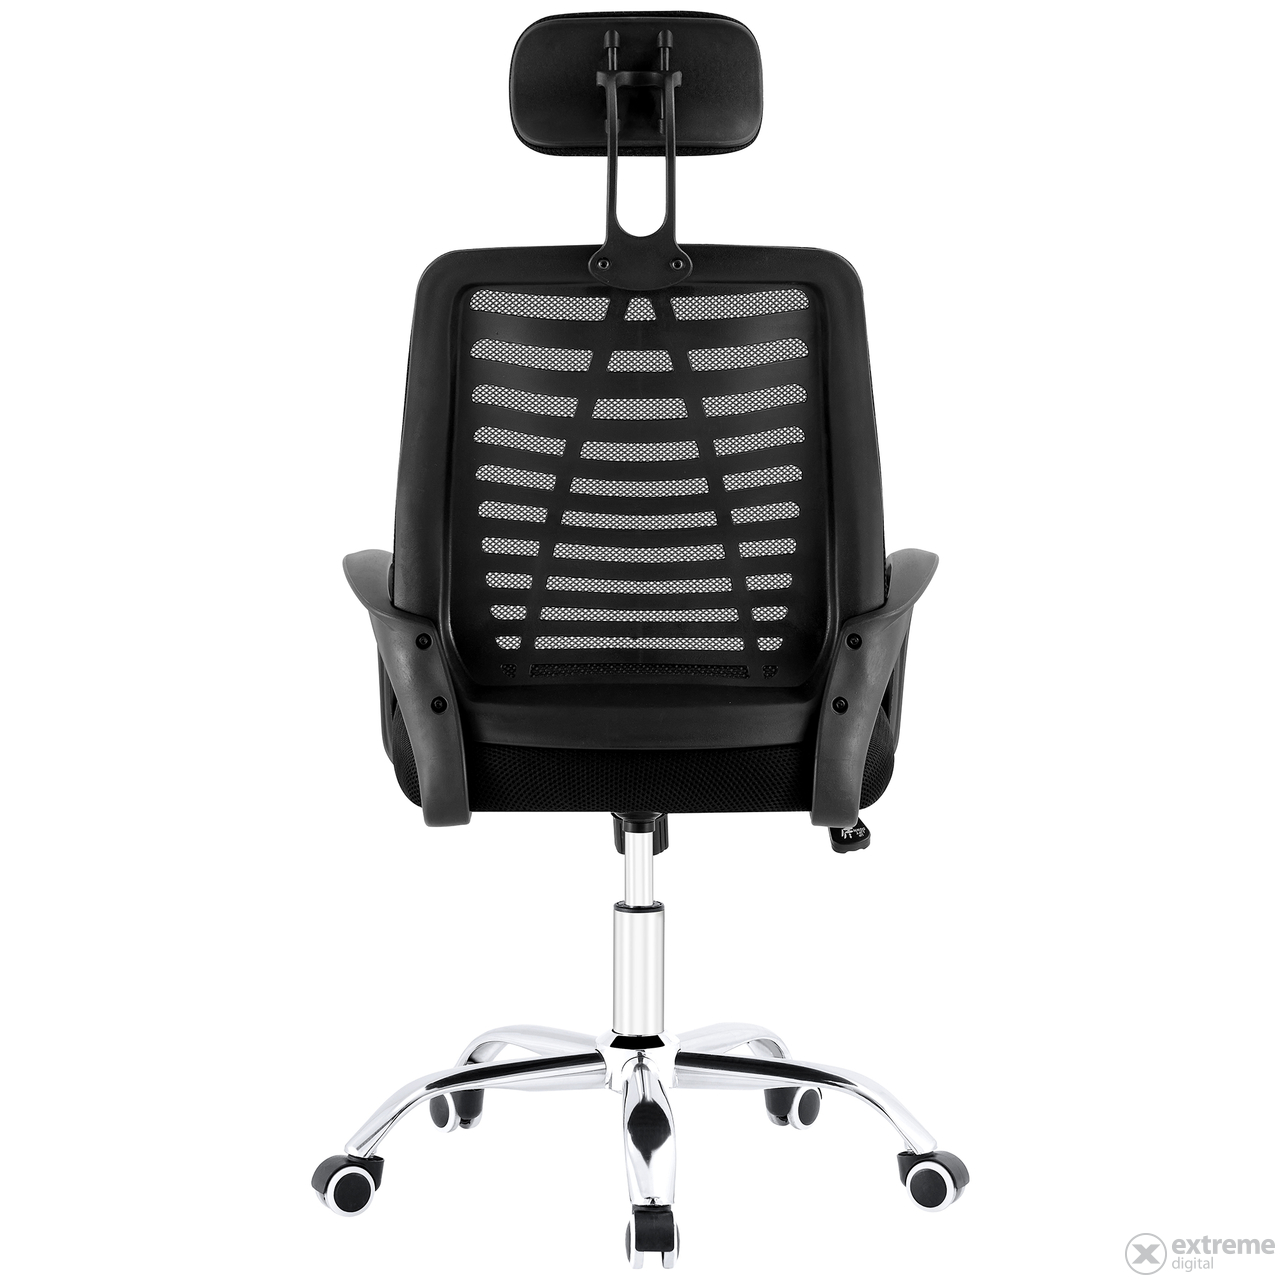 Kring Ergo Flexy Ergonomska uredska stolica u crnoj boji